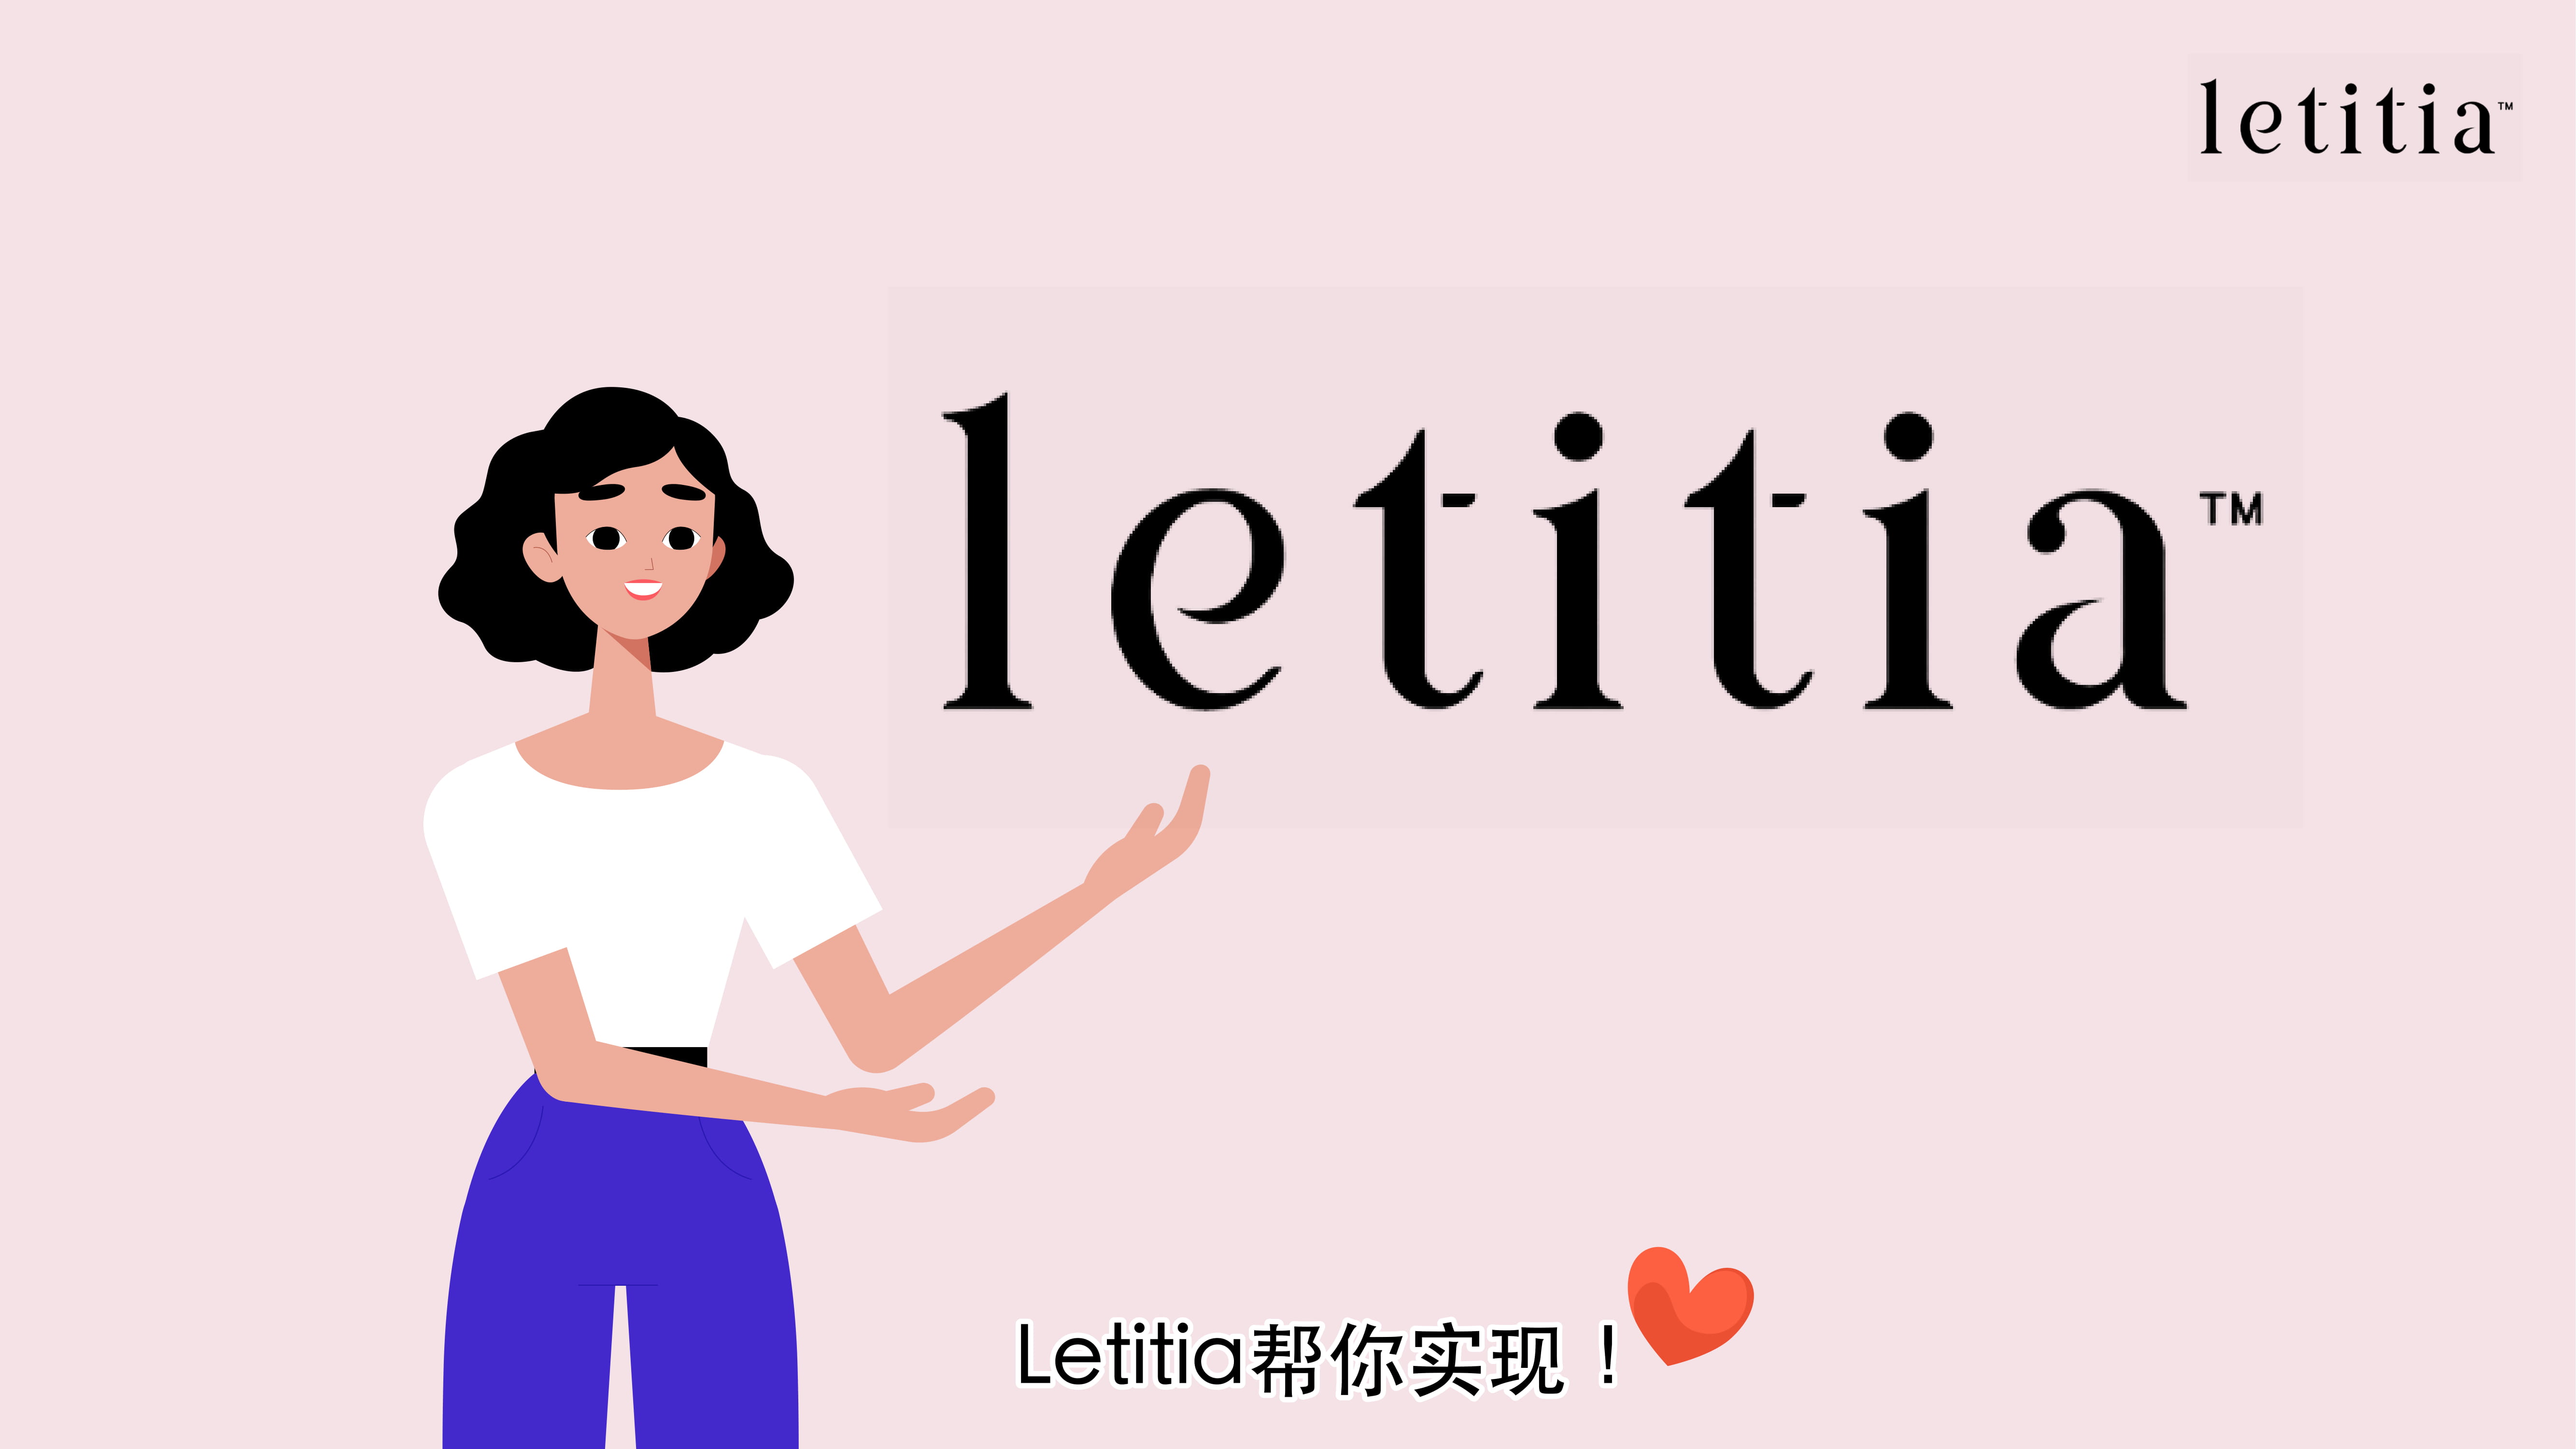 Letitia-intro video-storyboard-Final-03.jpg